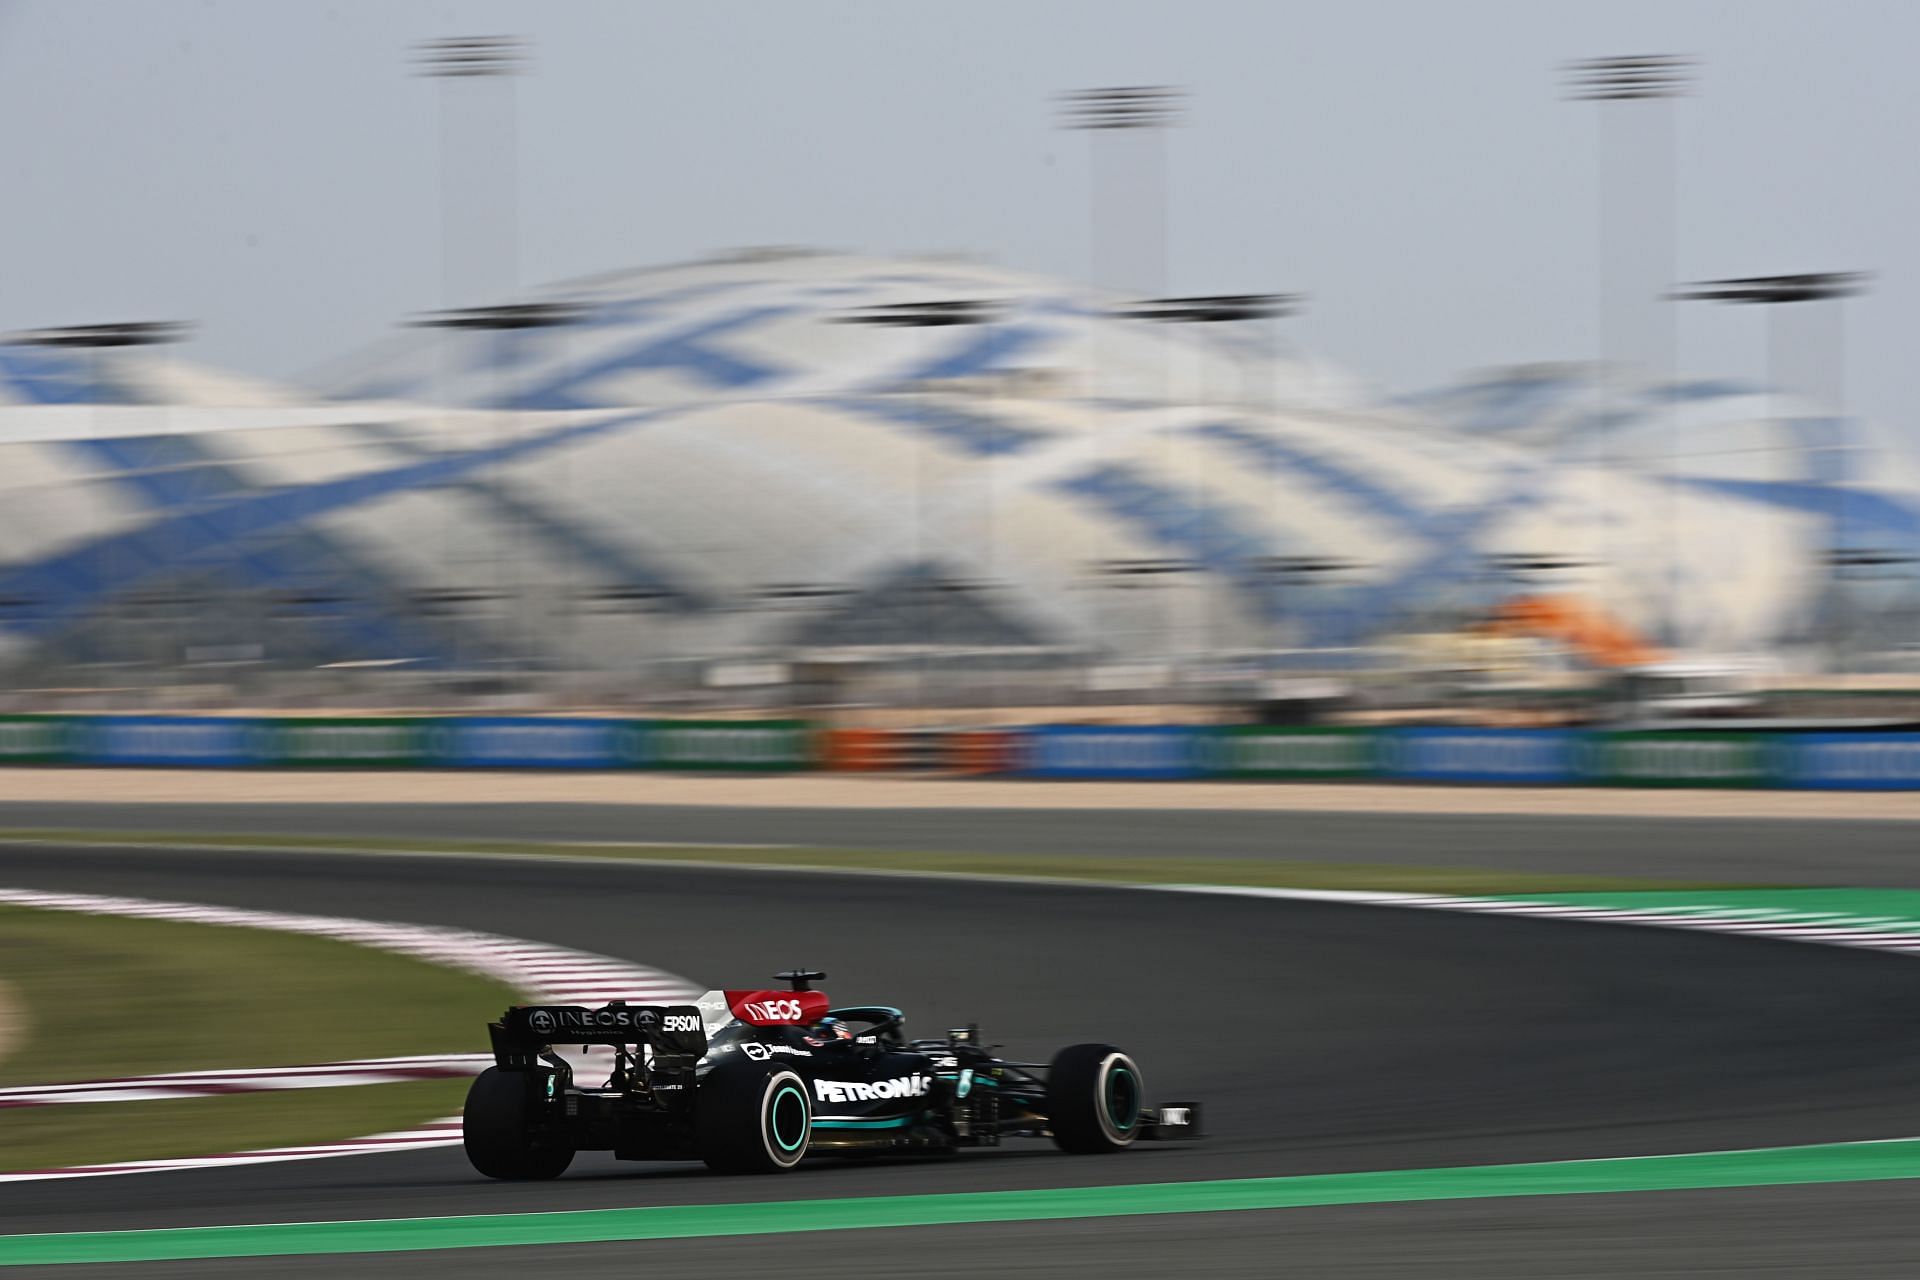 F1 Grand Prix of Qatar - Practice 1